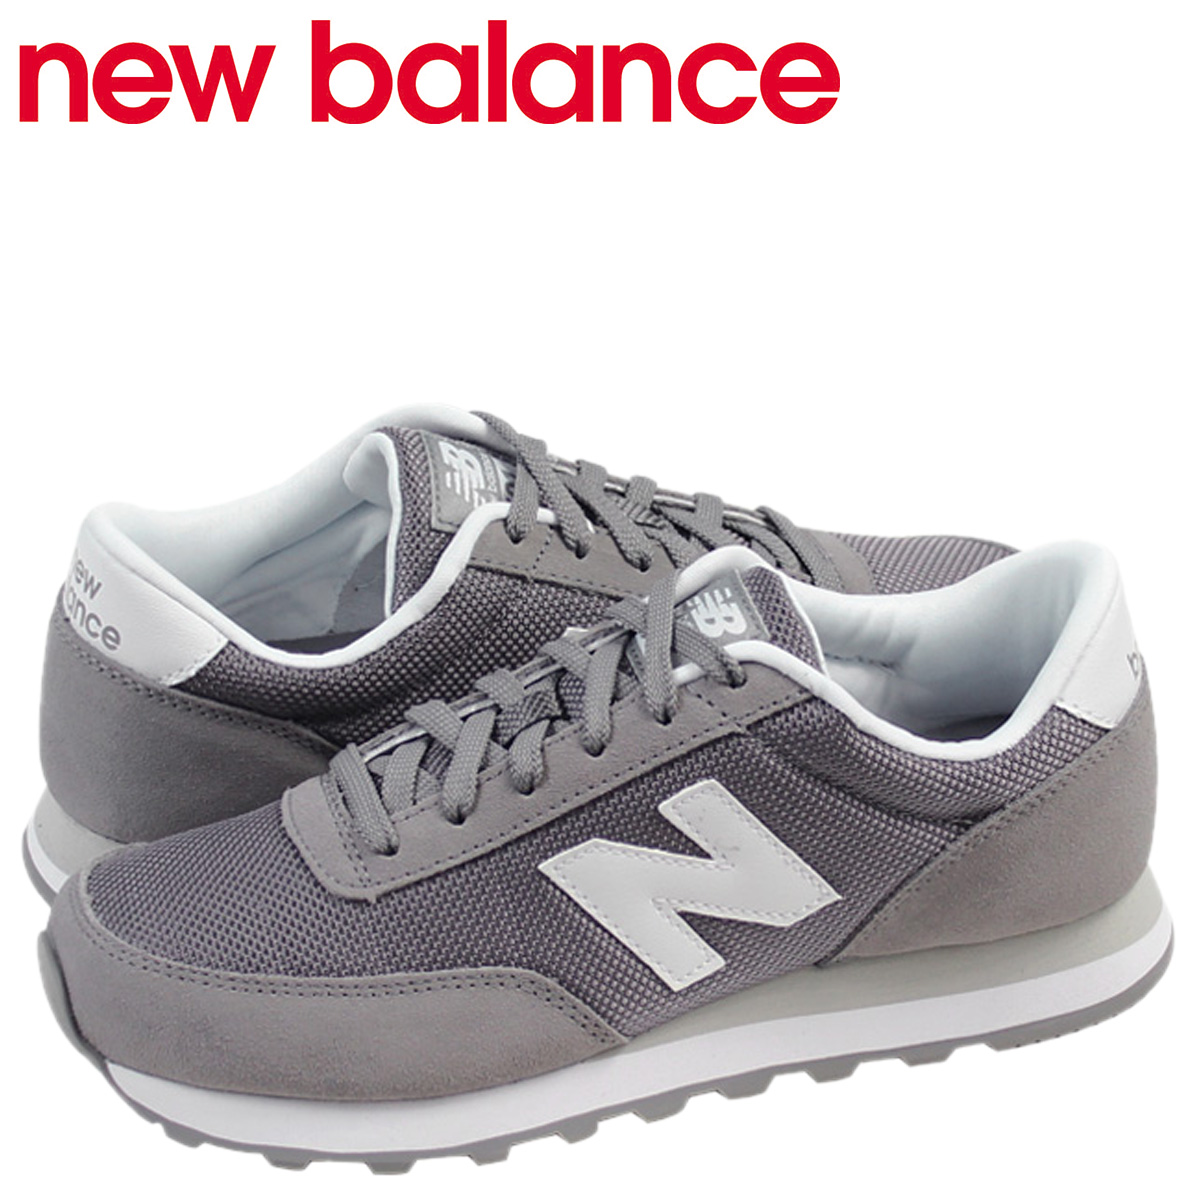 new balance 501 mens grey